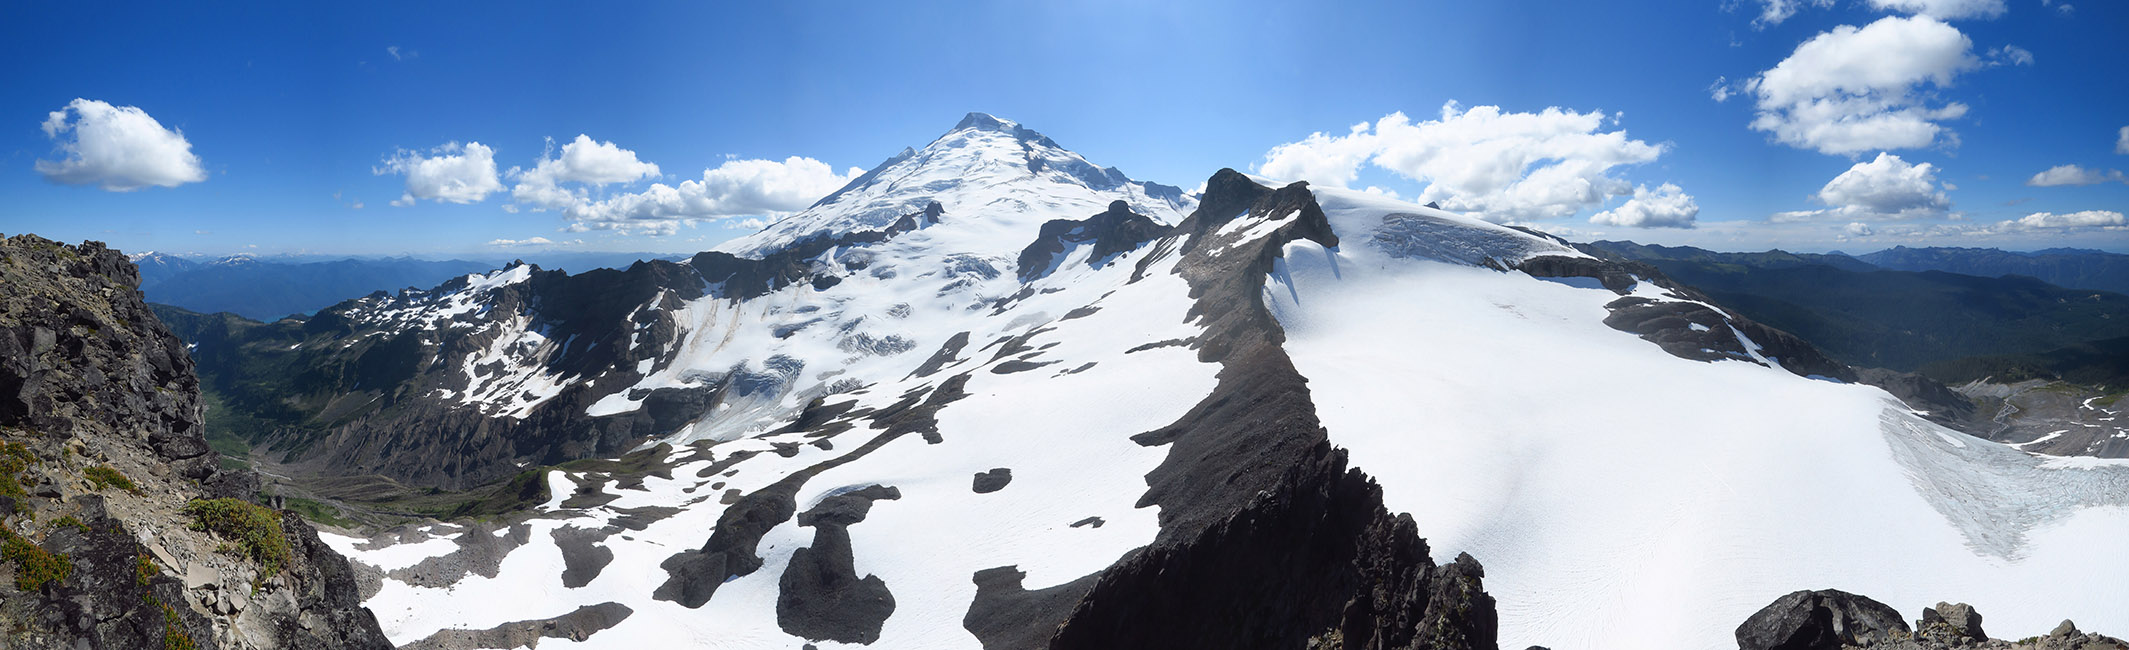 Mount Baker panorama [East Portal, Mt. Baker Wilderness, Whatcom County, Washington]